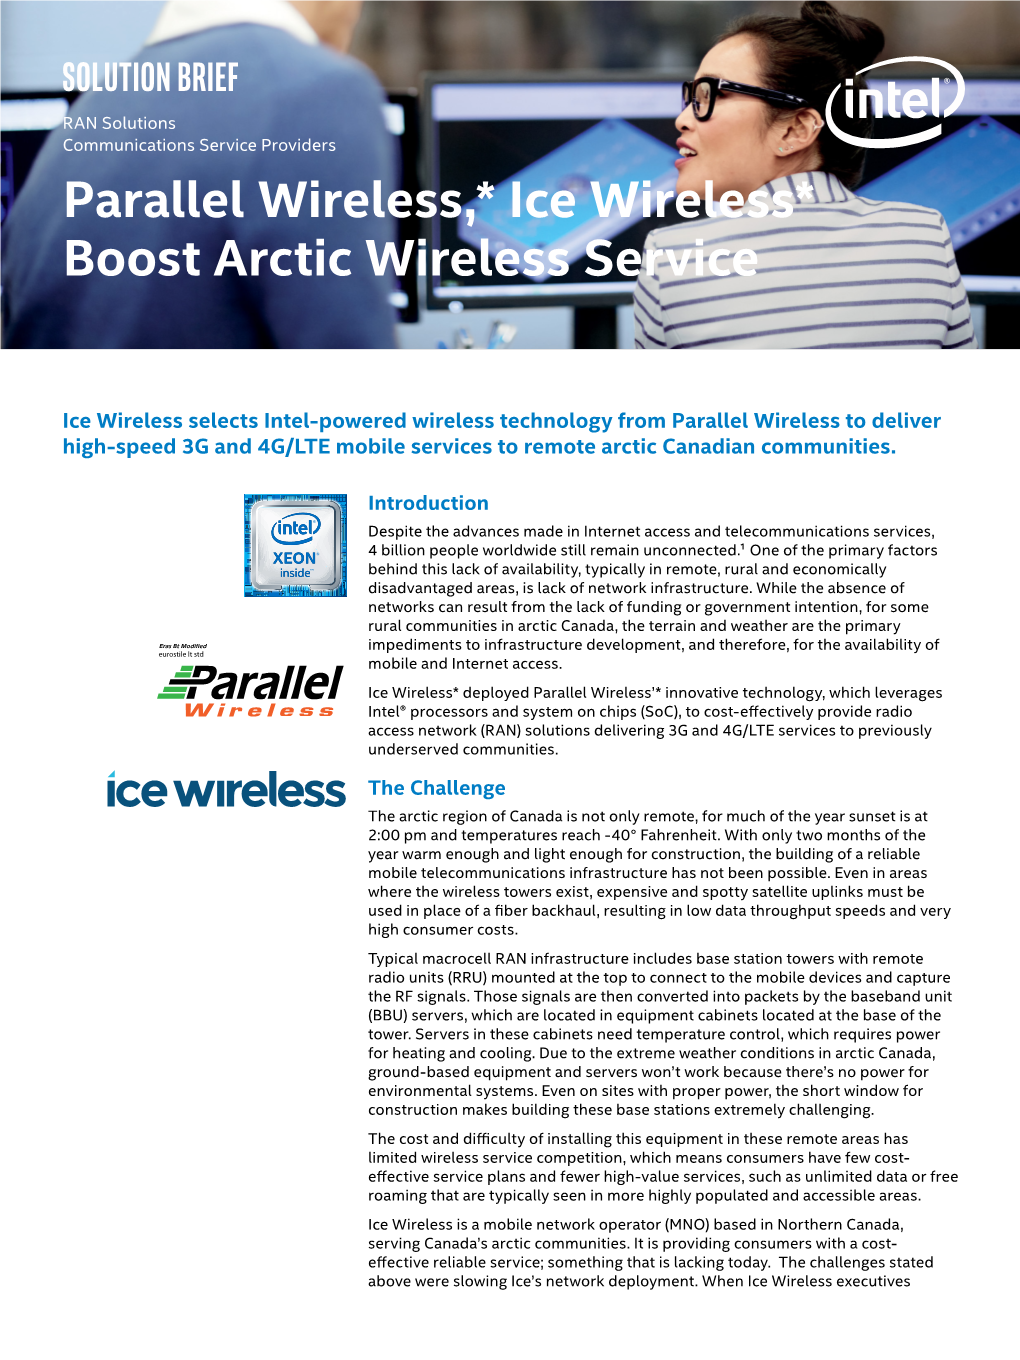 Parallel Wireless,* Ice Wireless* Boost Arctic Wireless Service